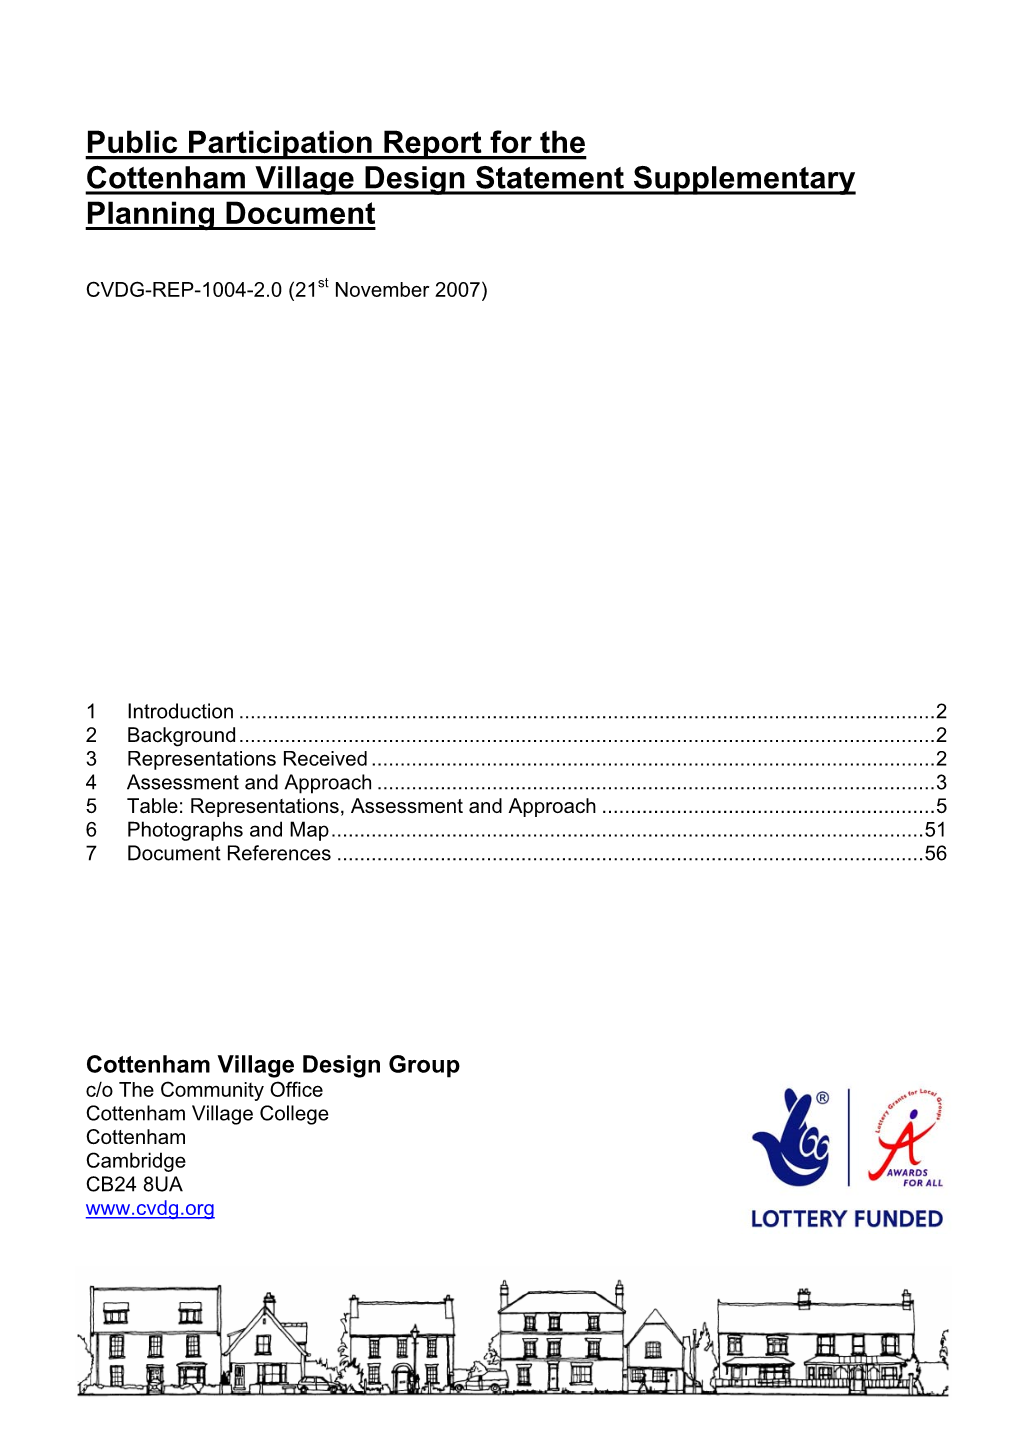 Public Participation Report for the Cottenham Village Design Statement Supplementary Planning Document